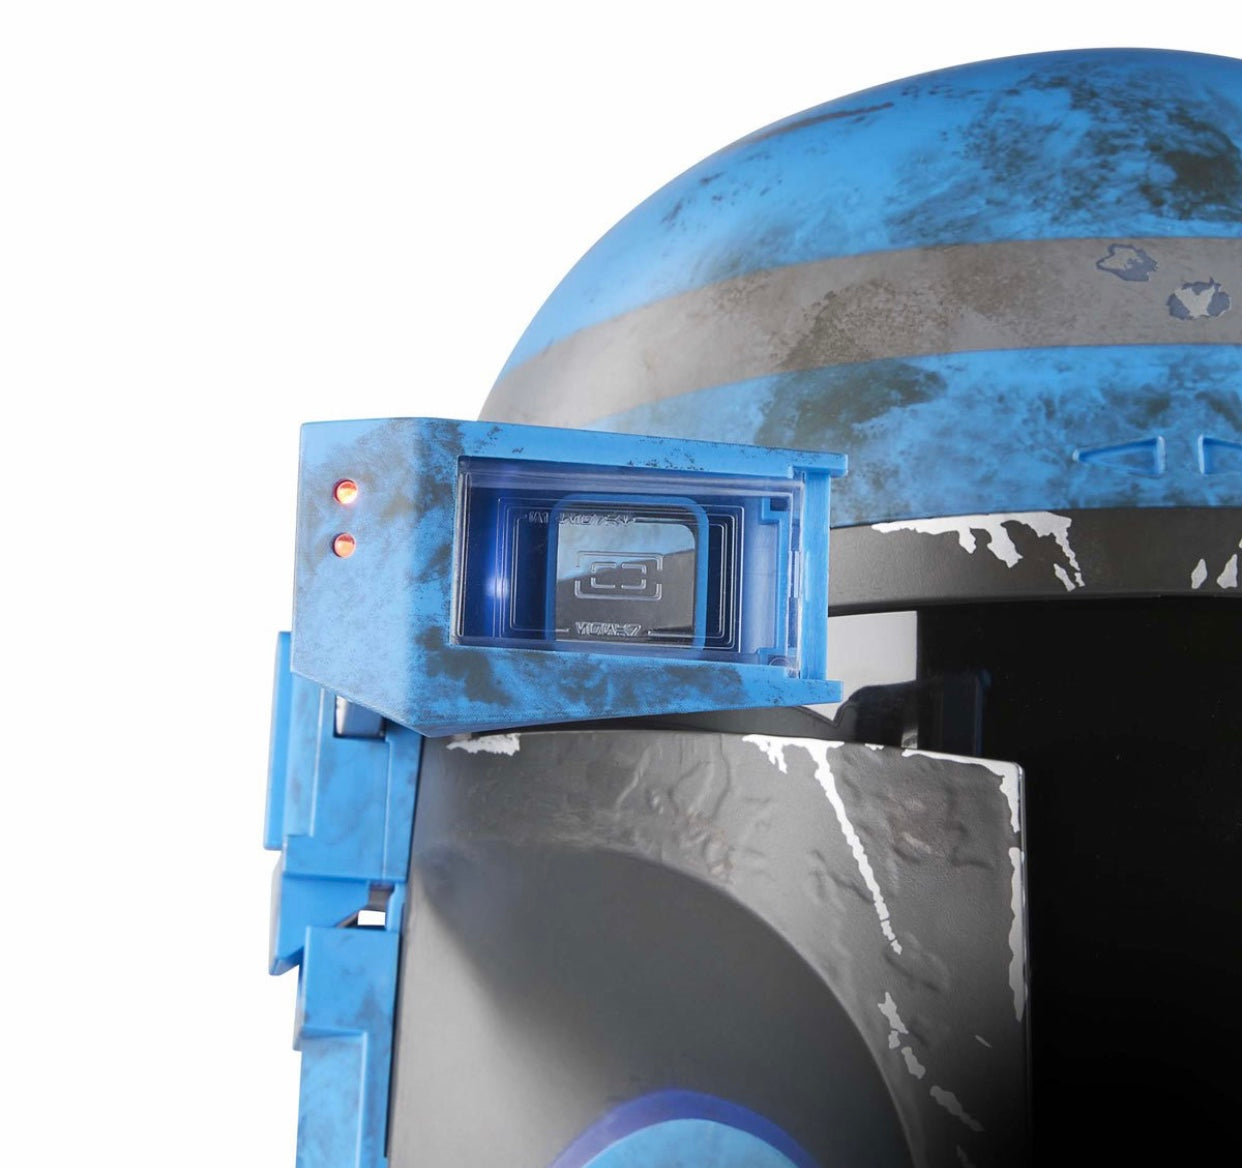 (Pre-Order) Hasbro Star Wars The Black Series Axe Woves Premium Electronic Helmet Prop Replica